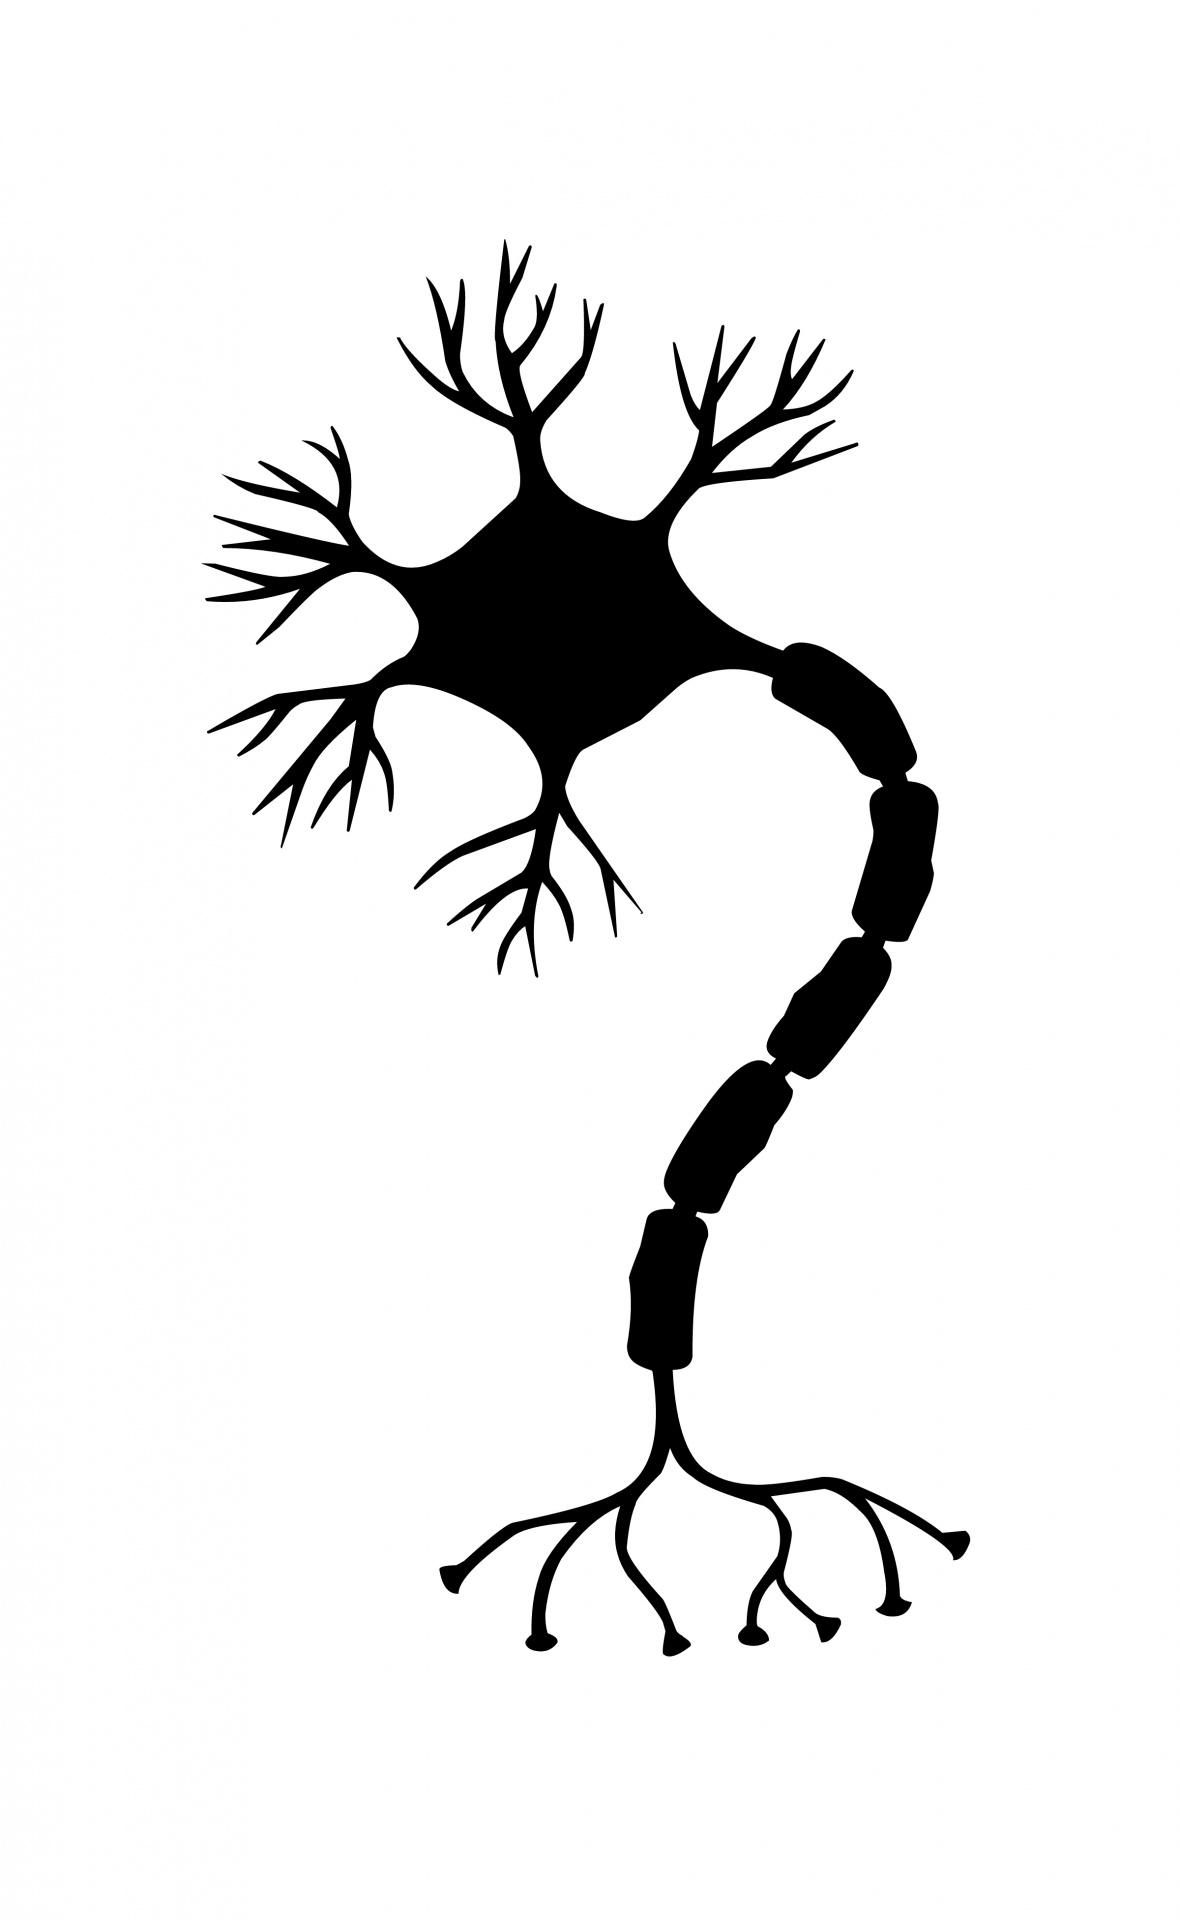 nerve cell, neuron, brain, neurons, nervous system, synapse, neural pathways, ribosome, vesicle, nervengeflecht, network, Silhouette